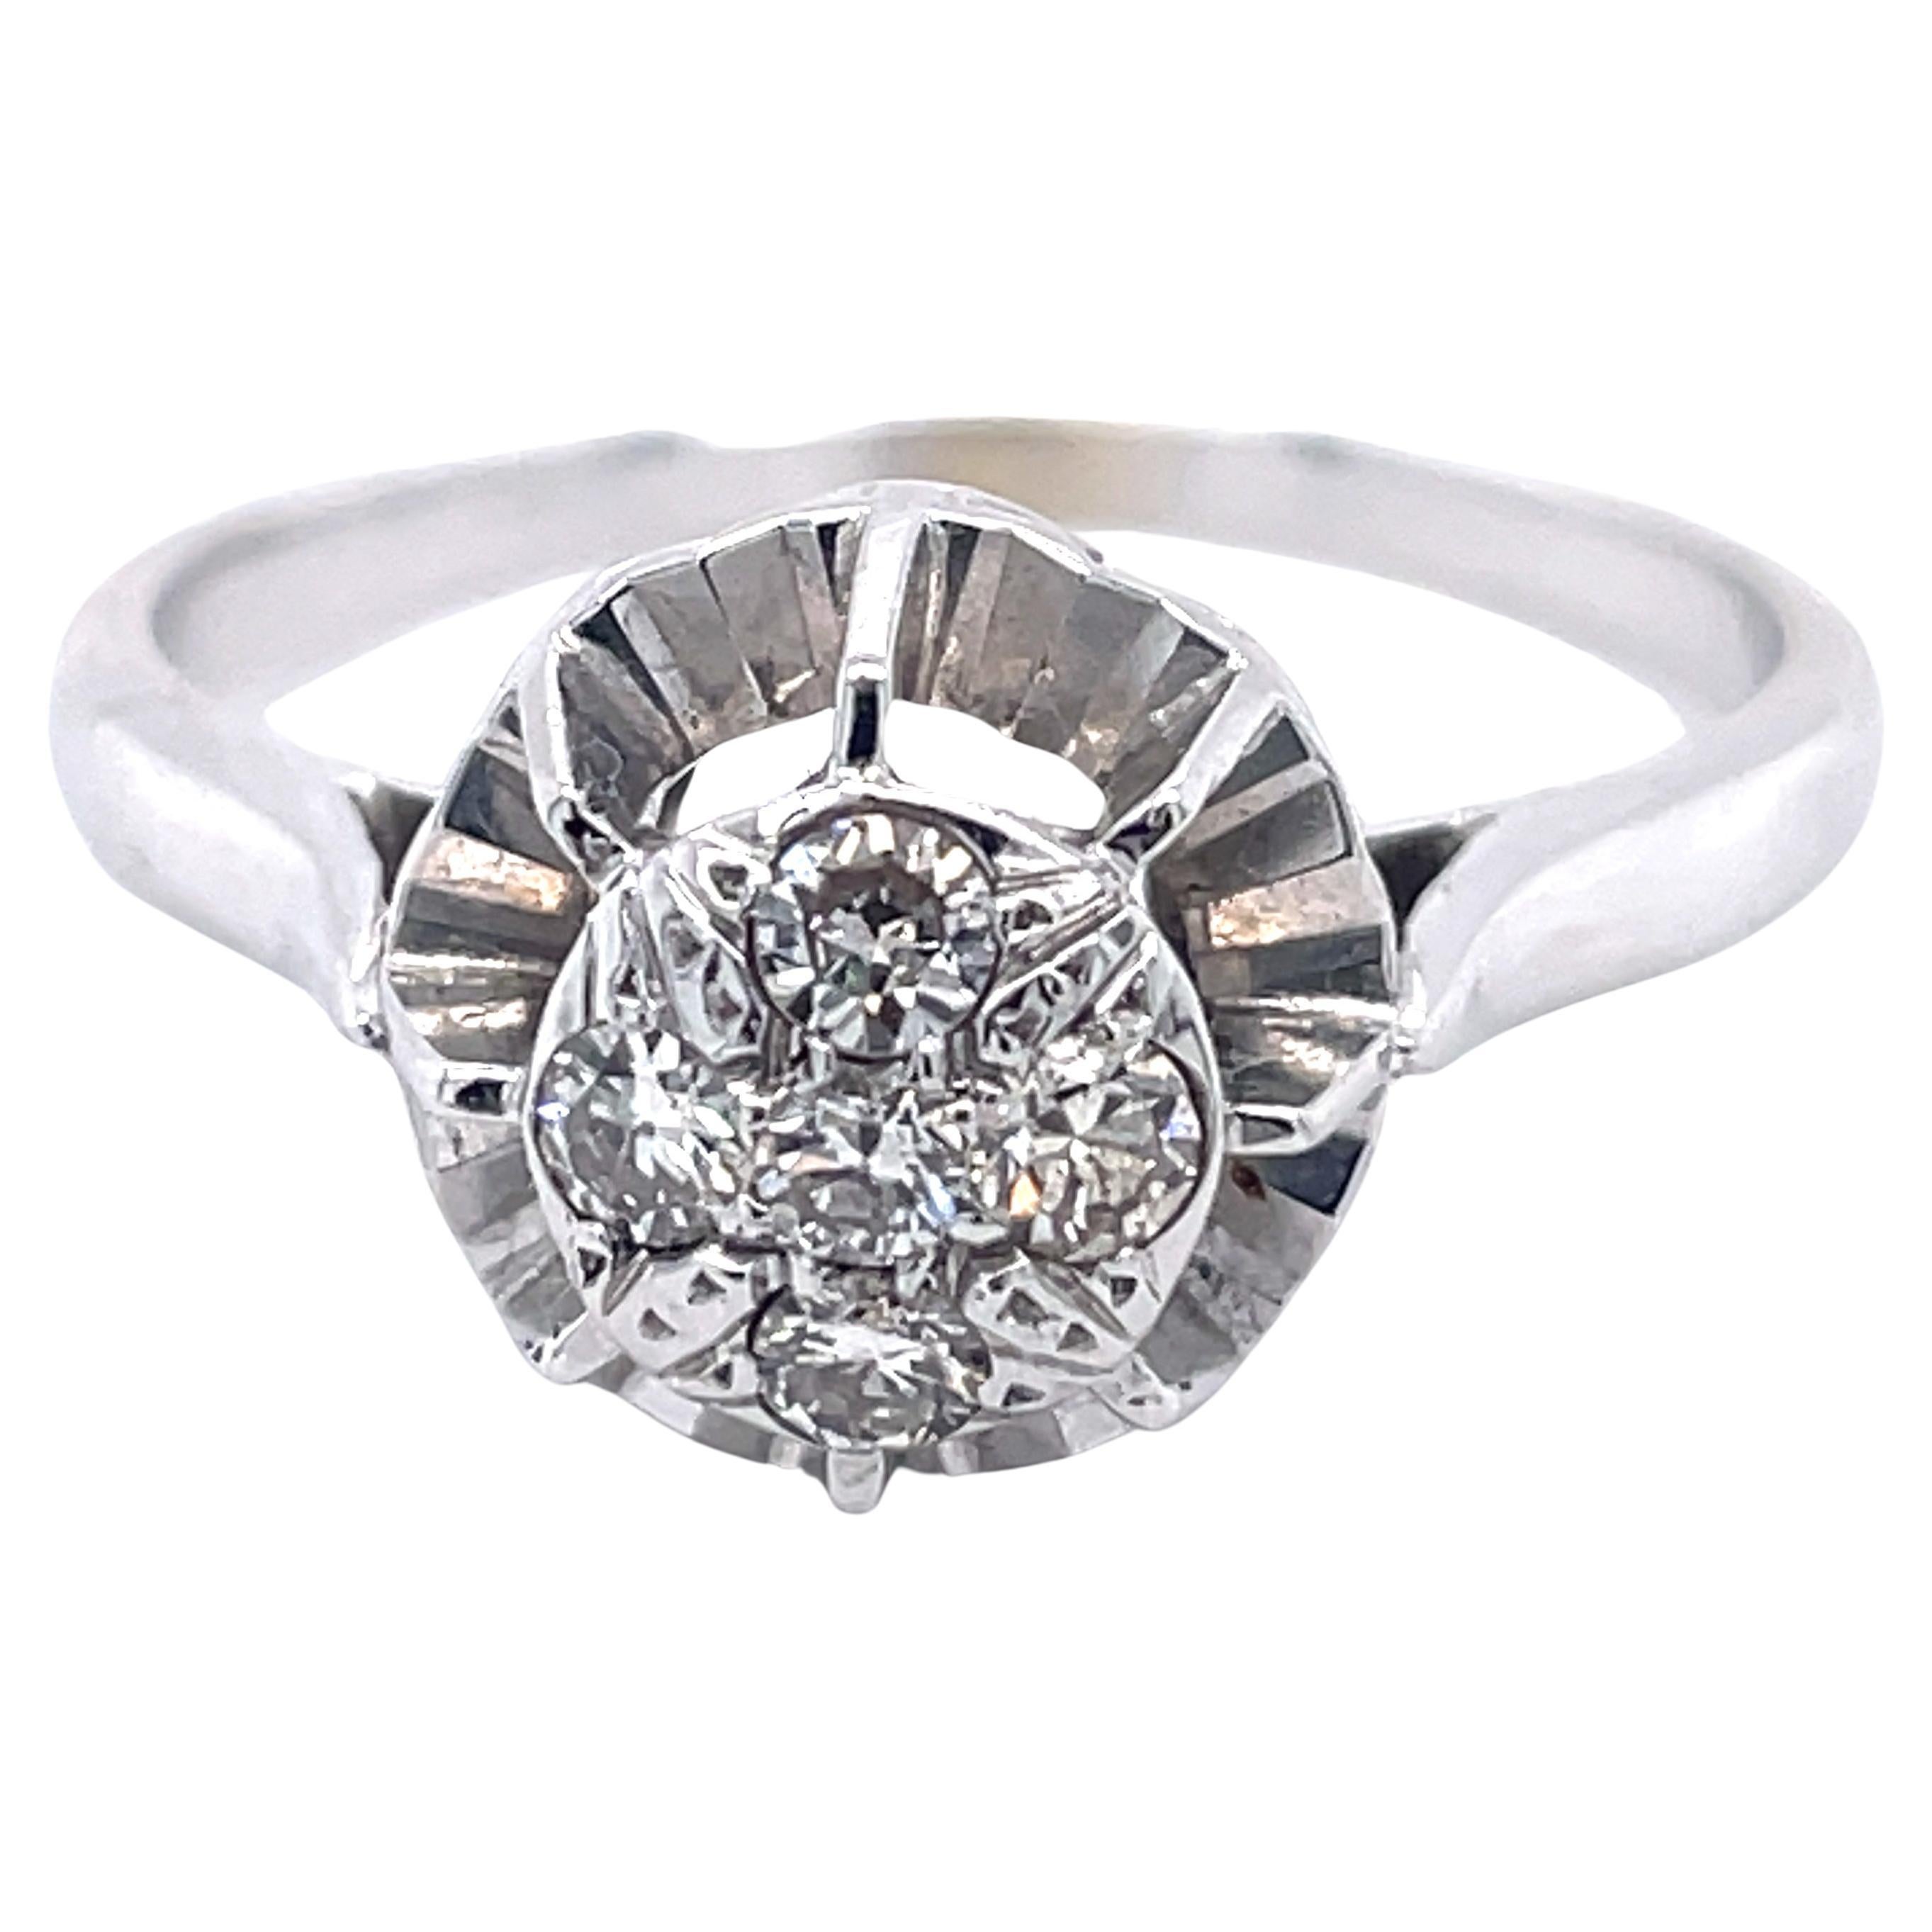 Diamond Cluster Ring, White gold 18K, 0.2ct Diamonds, Reflector Detailed Ring For Sale